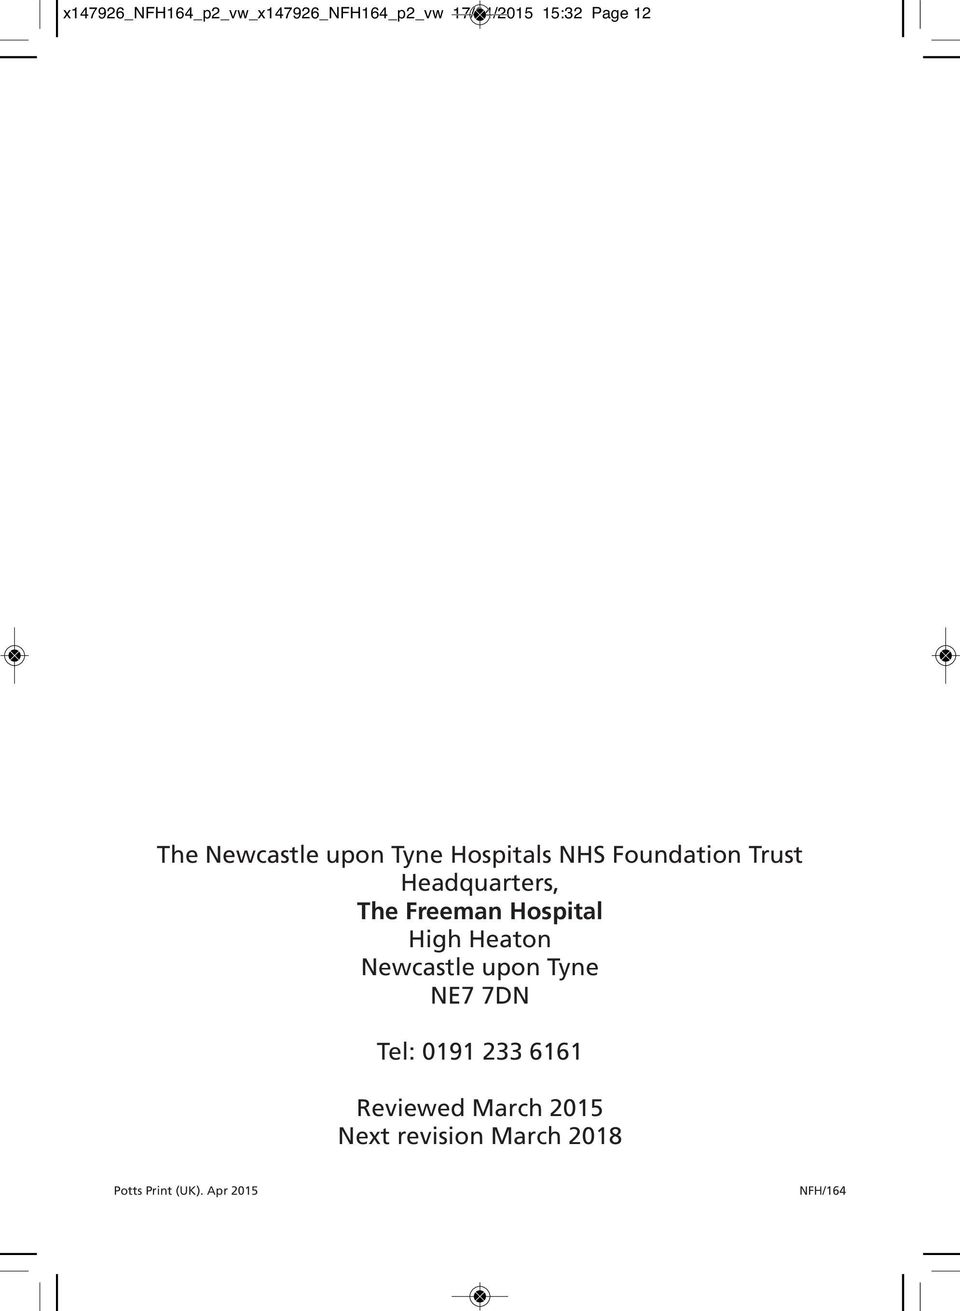 Freeman Hospital High Heaton Newcastle upon Tyne NE7 7DN Tel: 0191 233